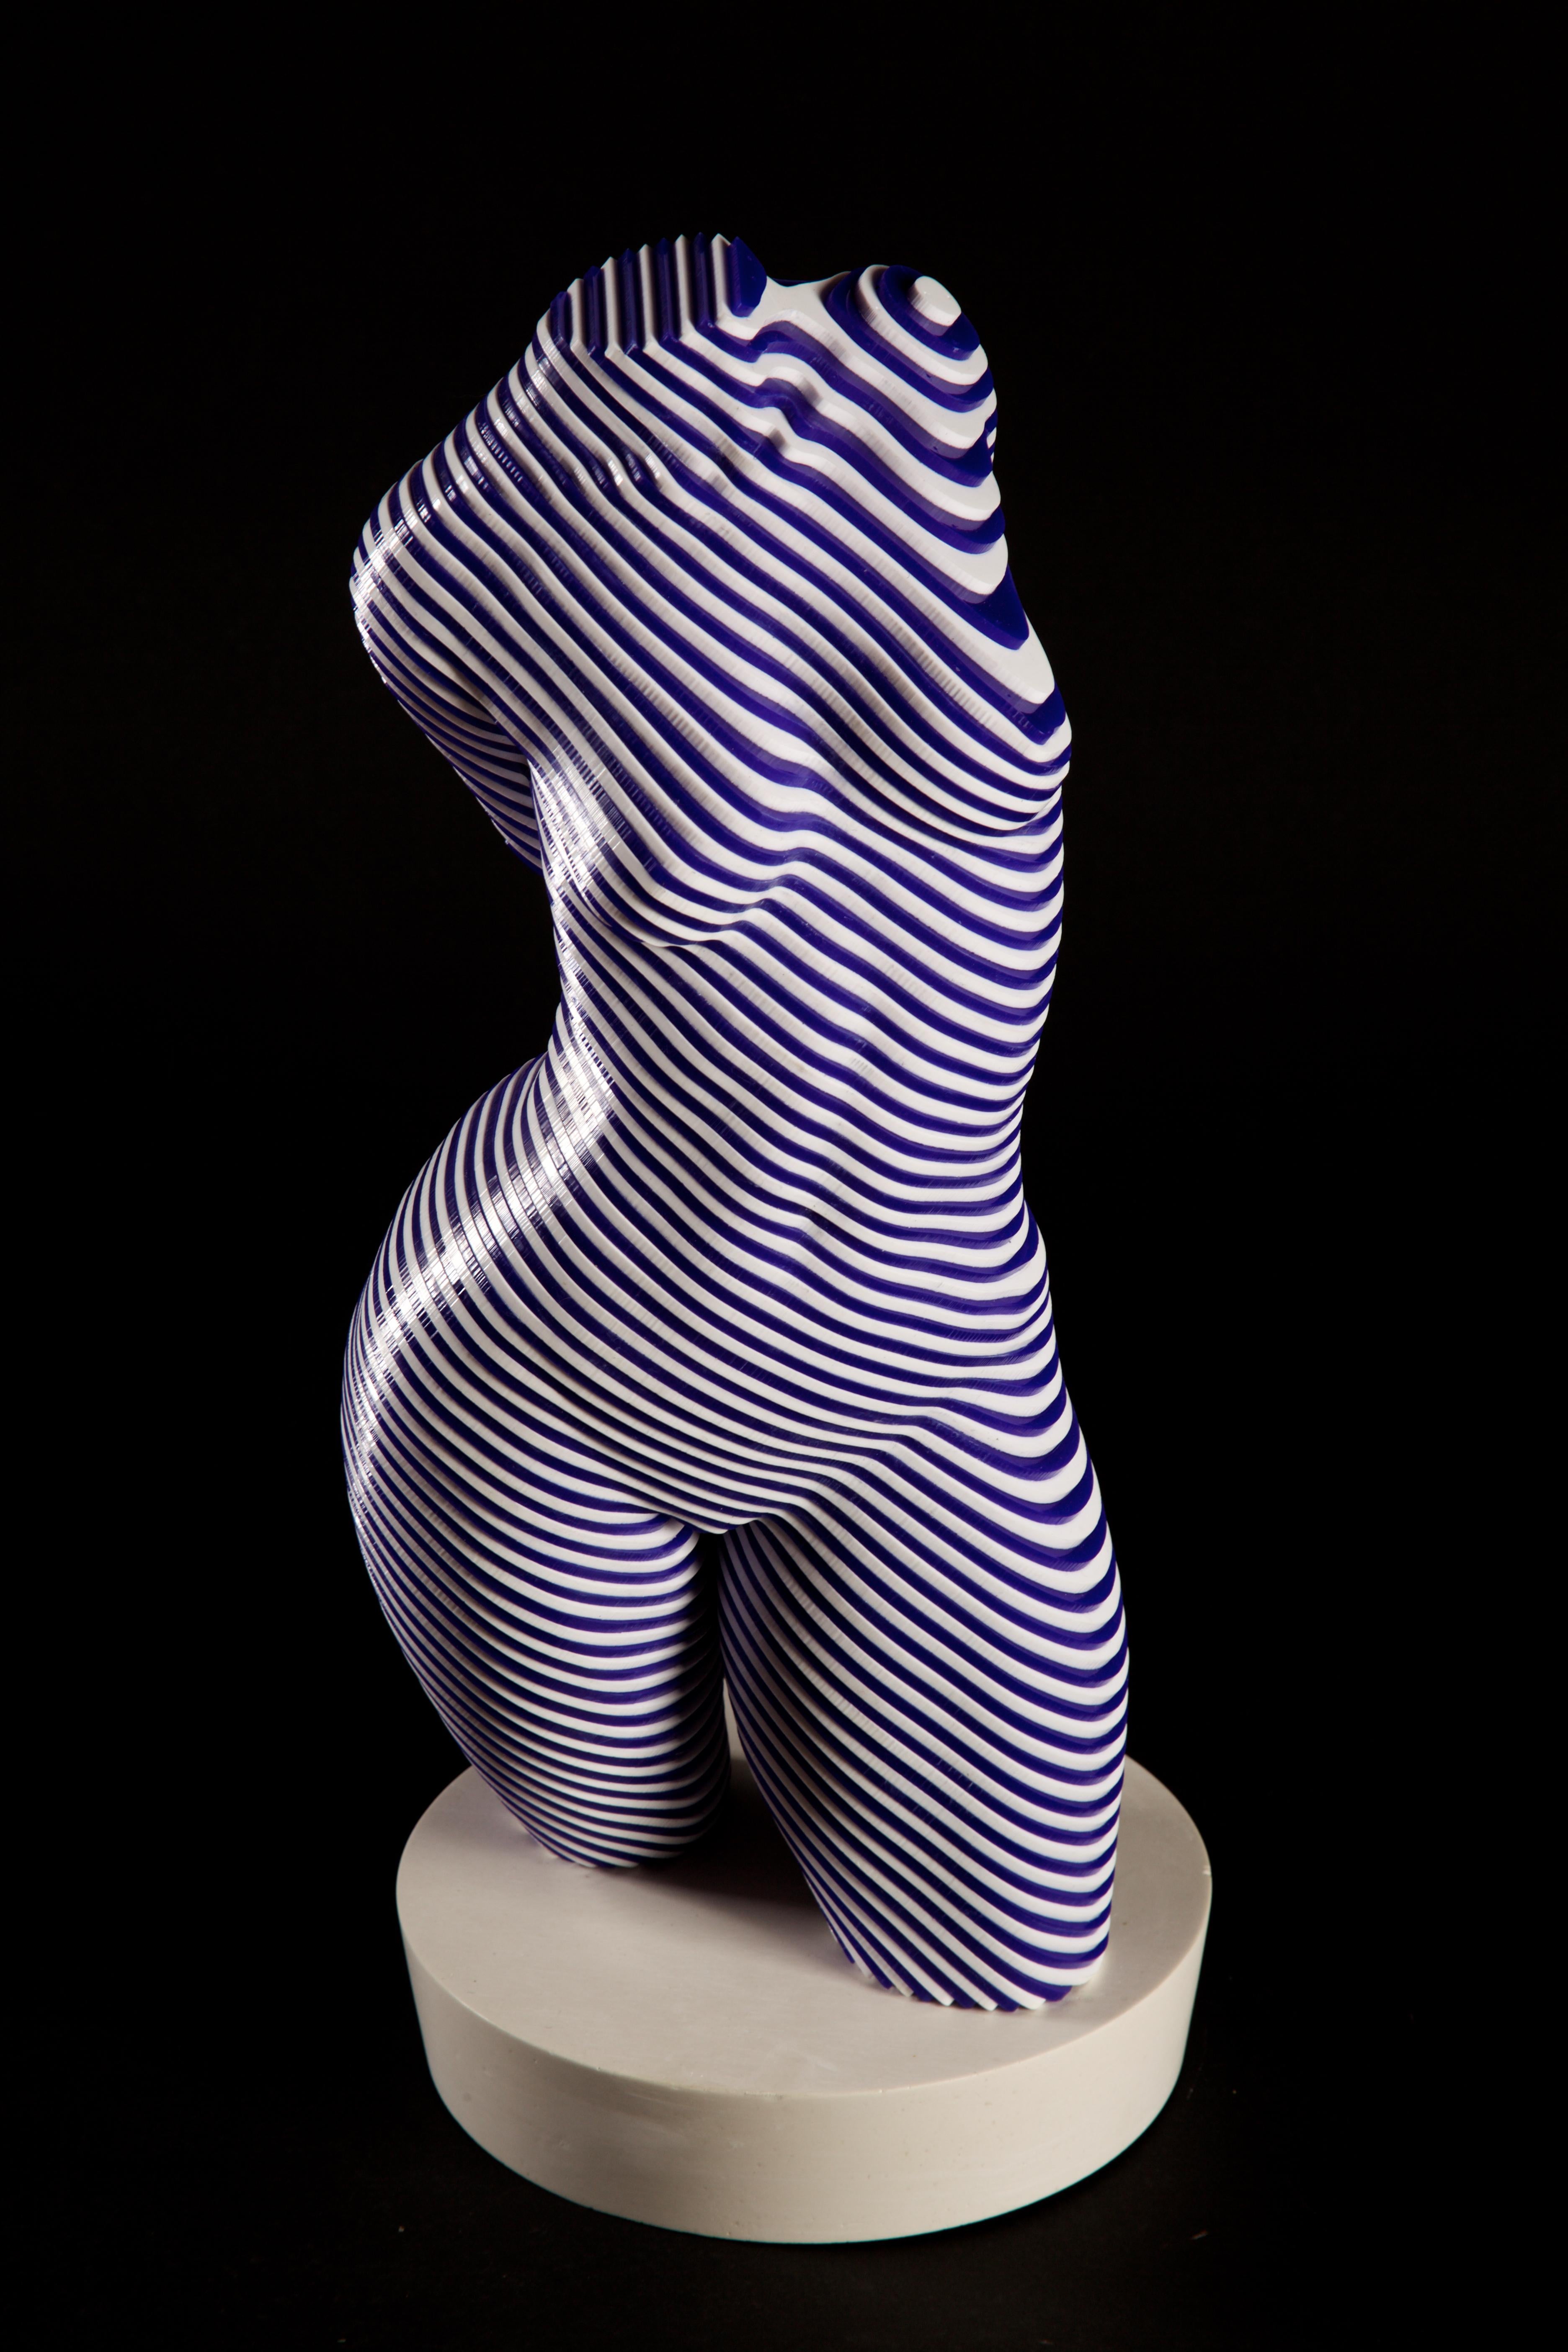 Olivier Duhamel Nude Sculpture - Roxie..Contemporary plexiglass sculpture, nude female, suitable outdoor display 